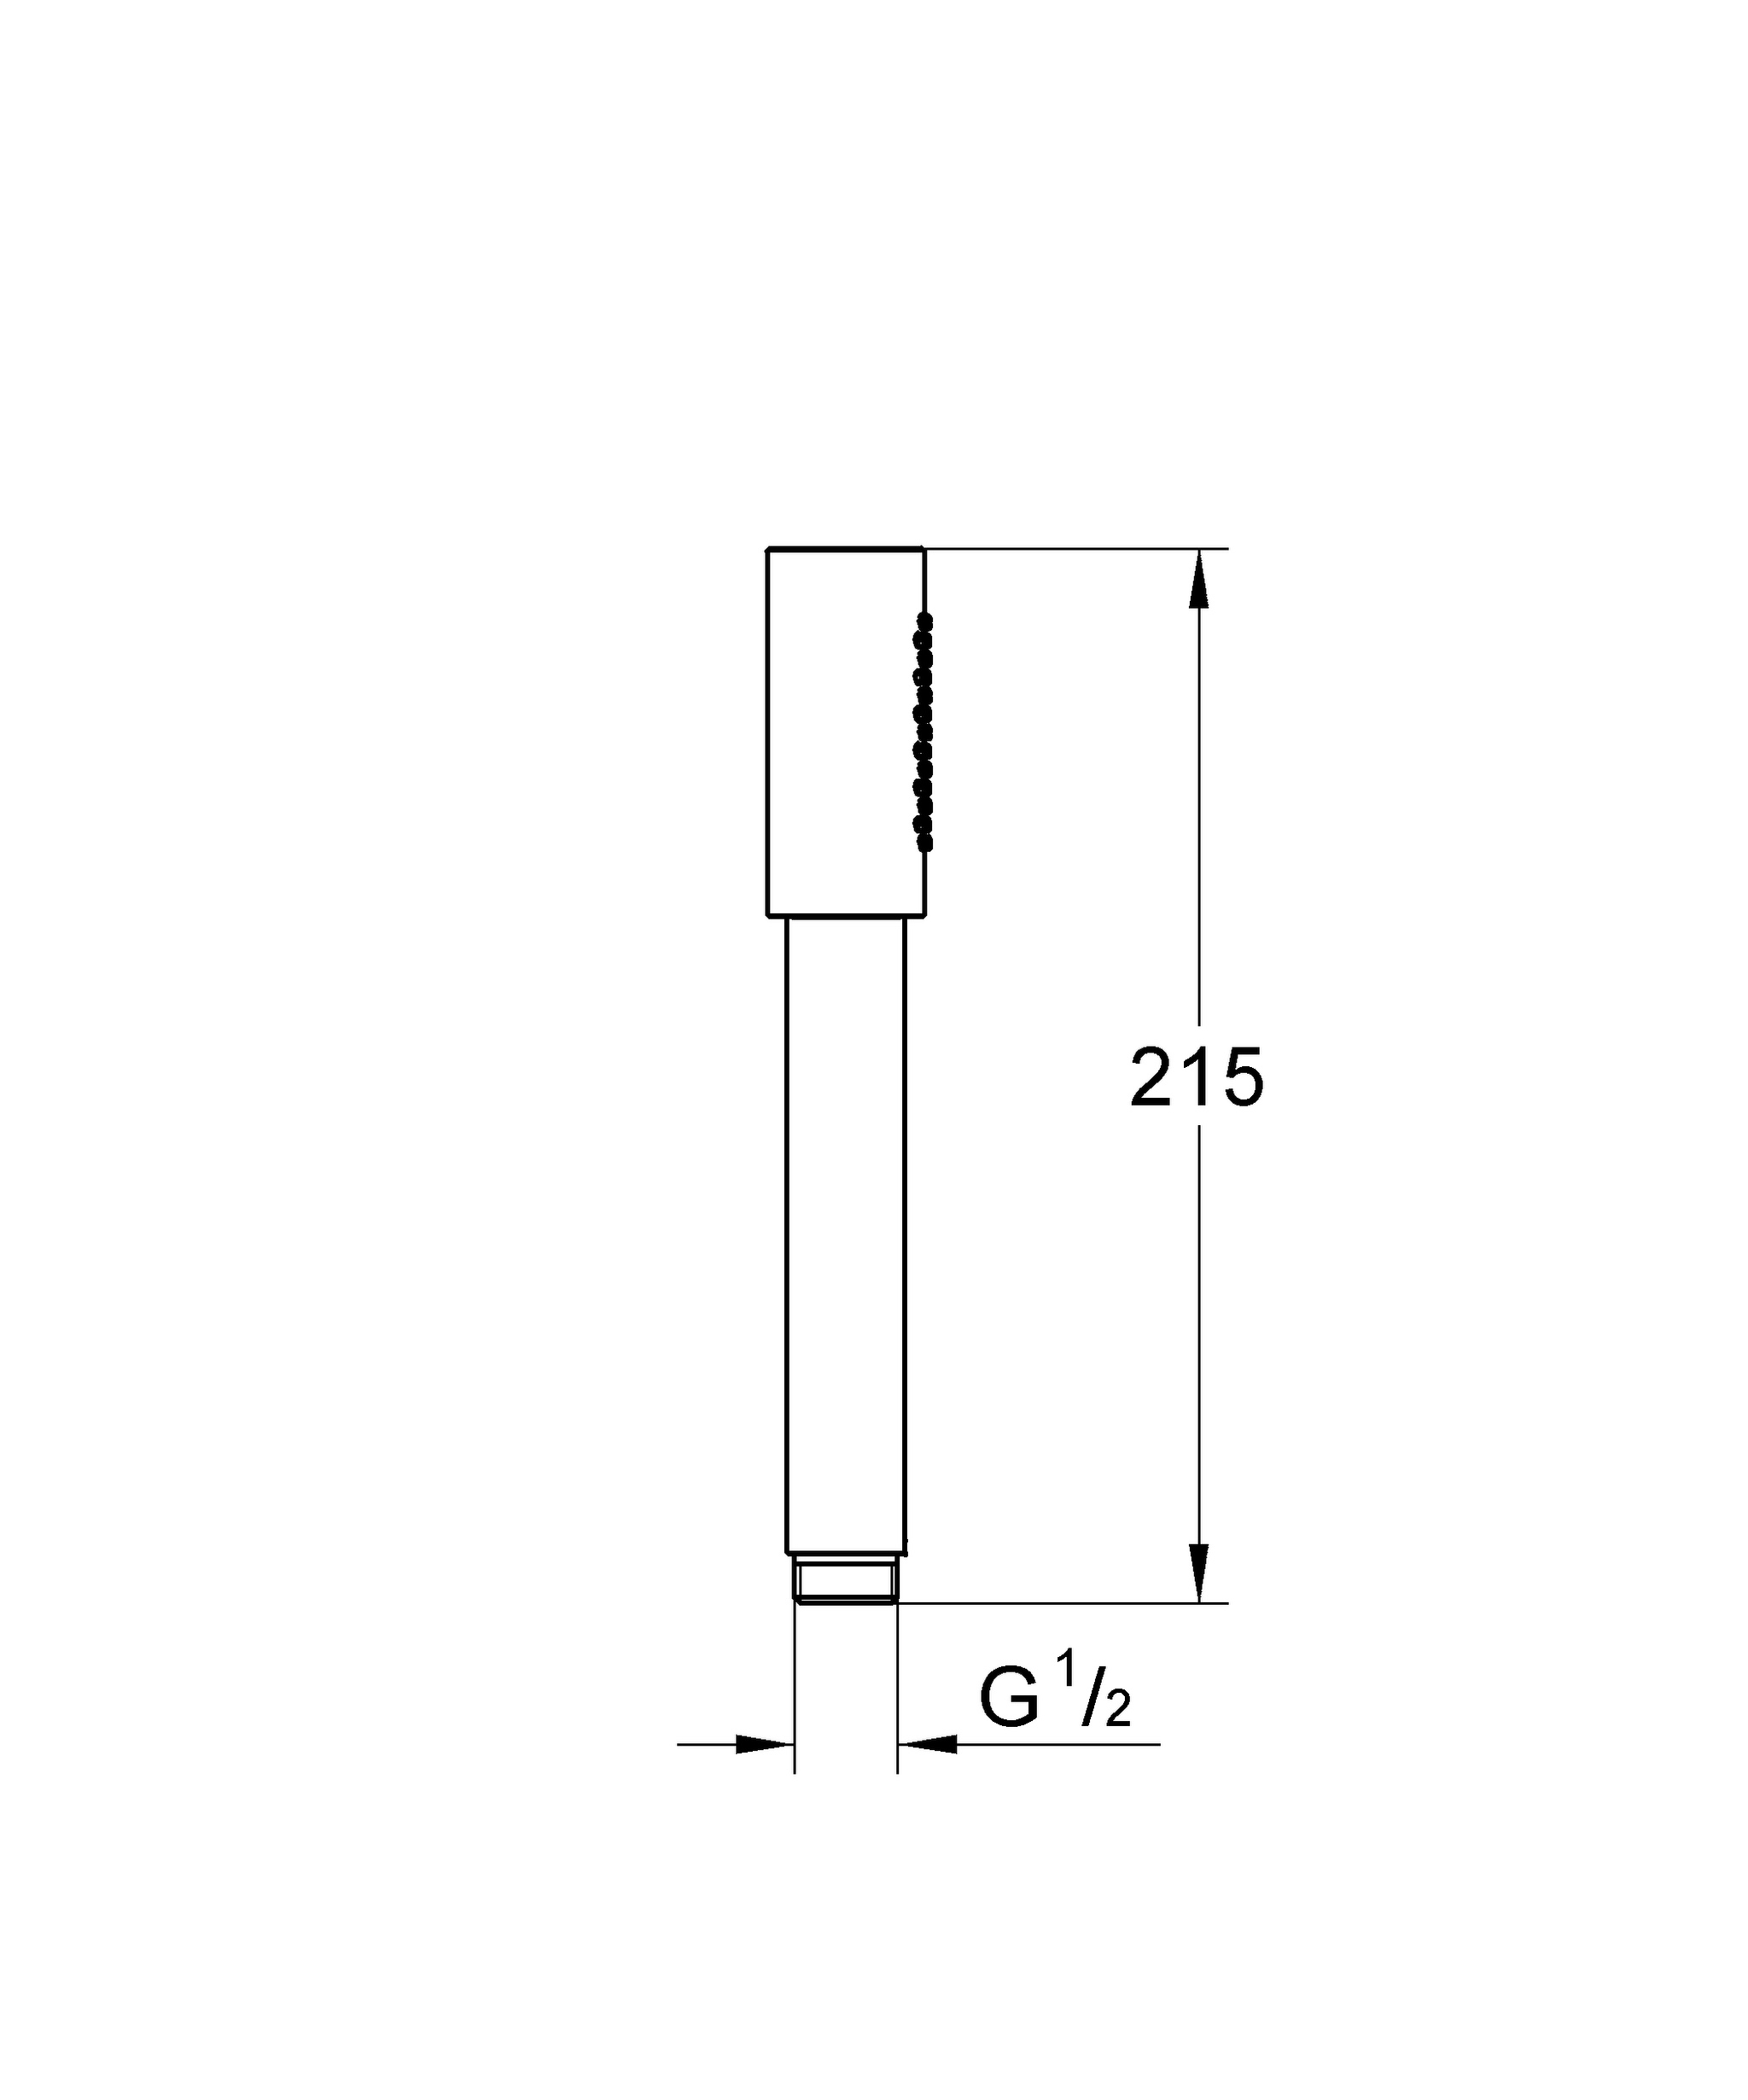 Handbrause Rainshower Aqua Stick 26866, Metall, 1 Strahlart, 6,6 l/min Durchflusskonstanthalter, chrom